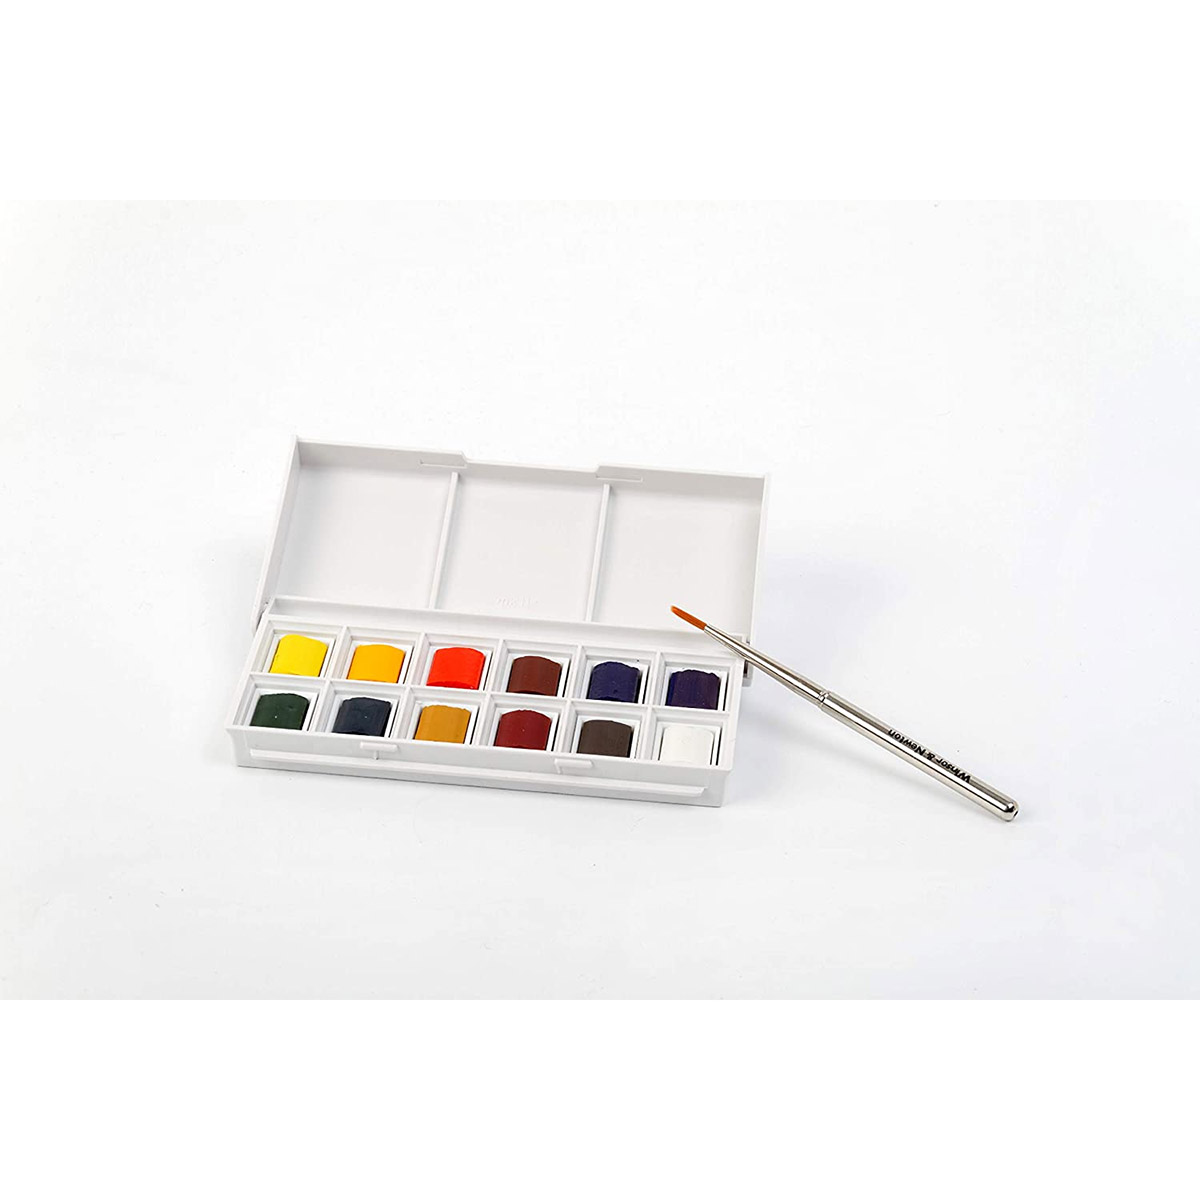 Winsor & Newton Cotman Watercolor & Water Brush Pen Set, 14 Pieces 